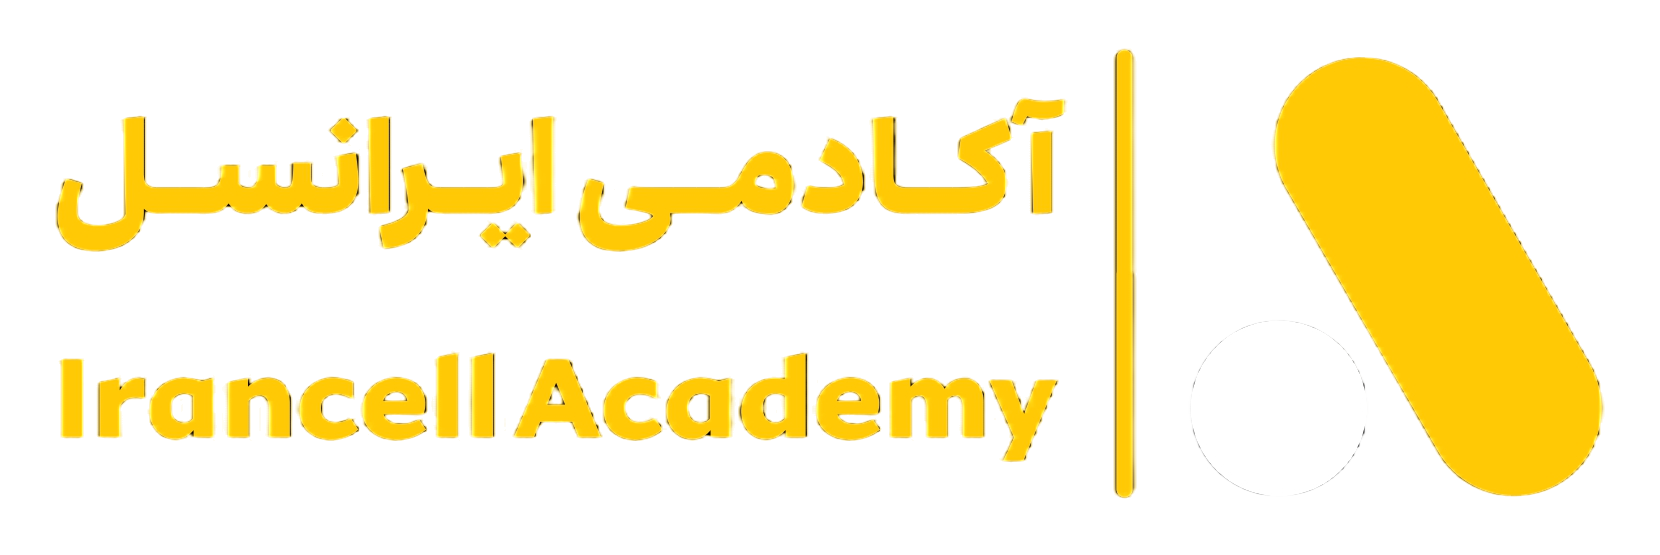 irancell-academy